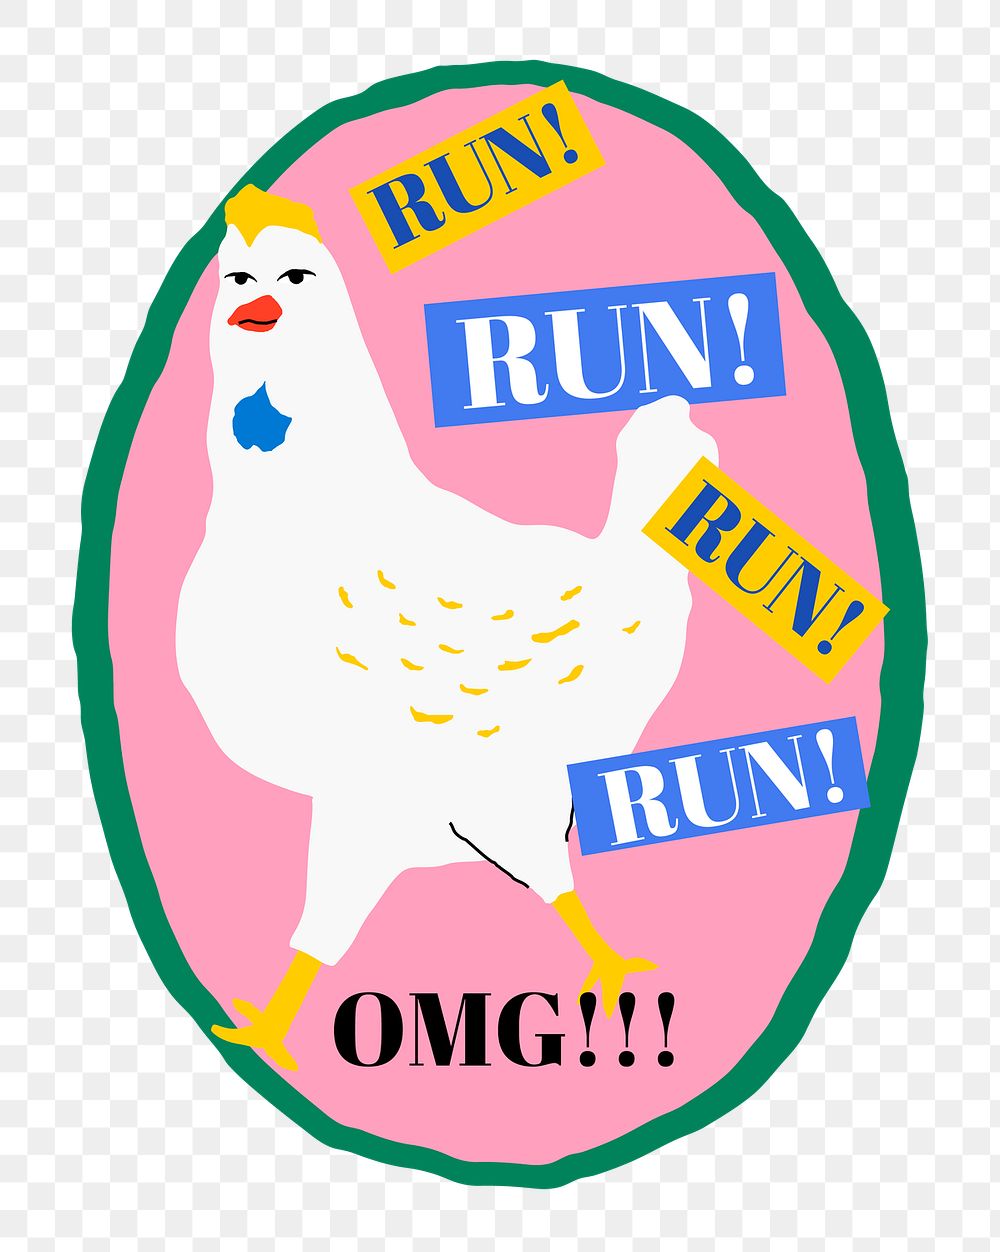 Png chicken badge with run run run text